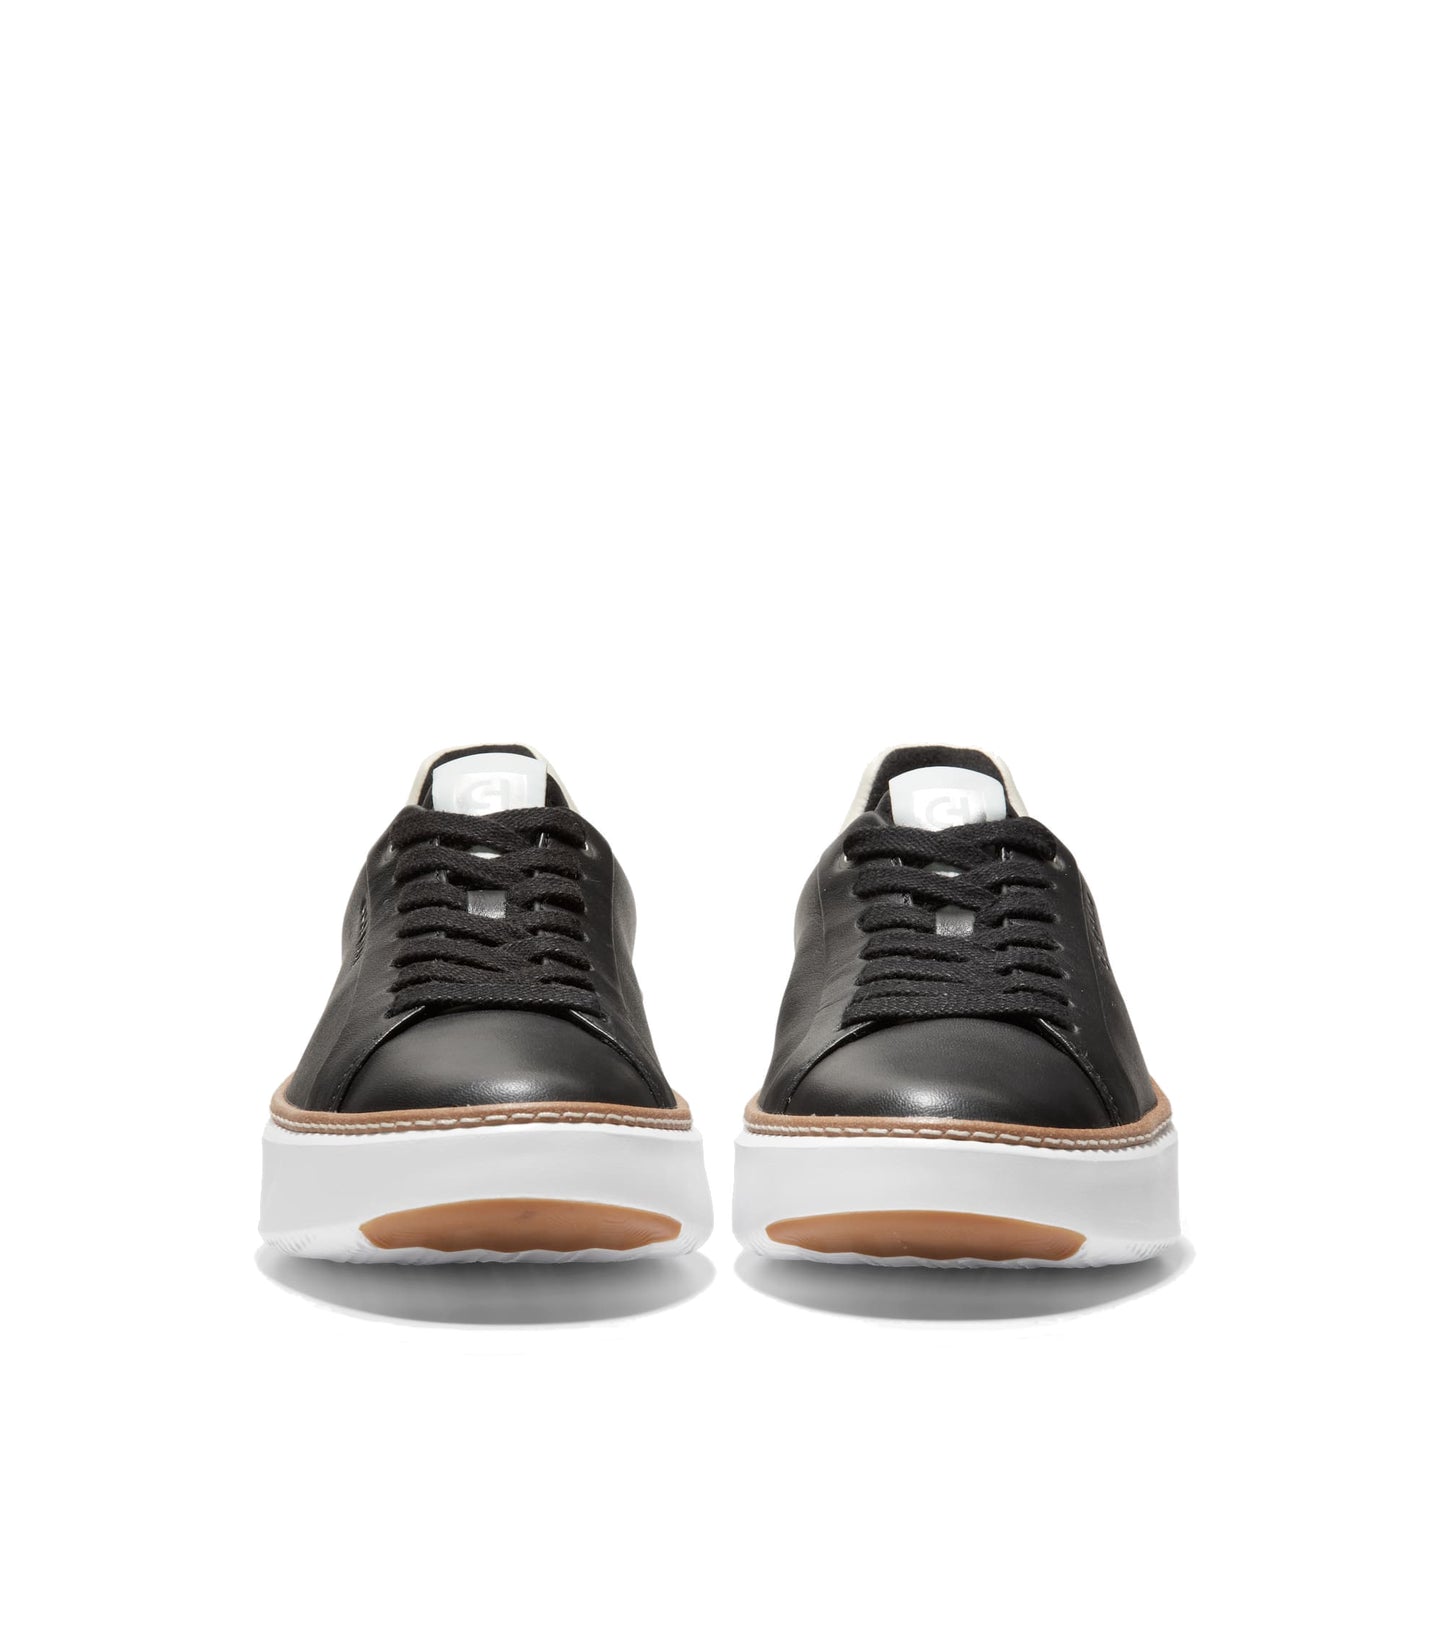 Cole Haan Women's GrandPrø Topspin Sneakers - Black/Optic White